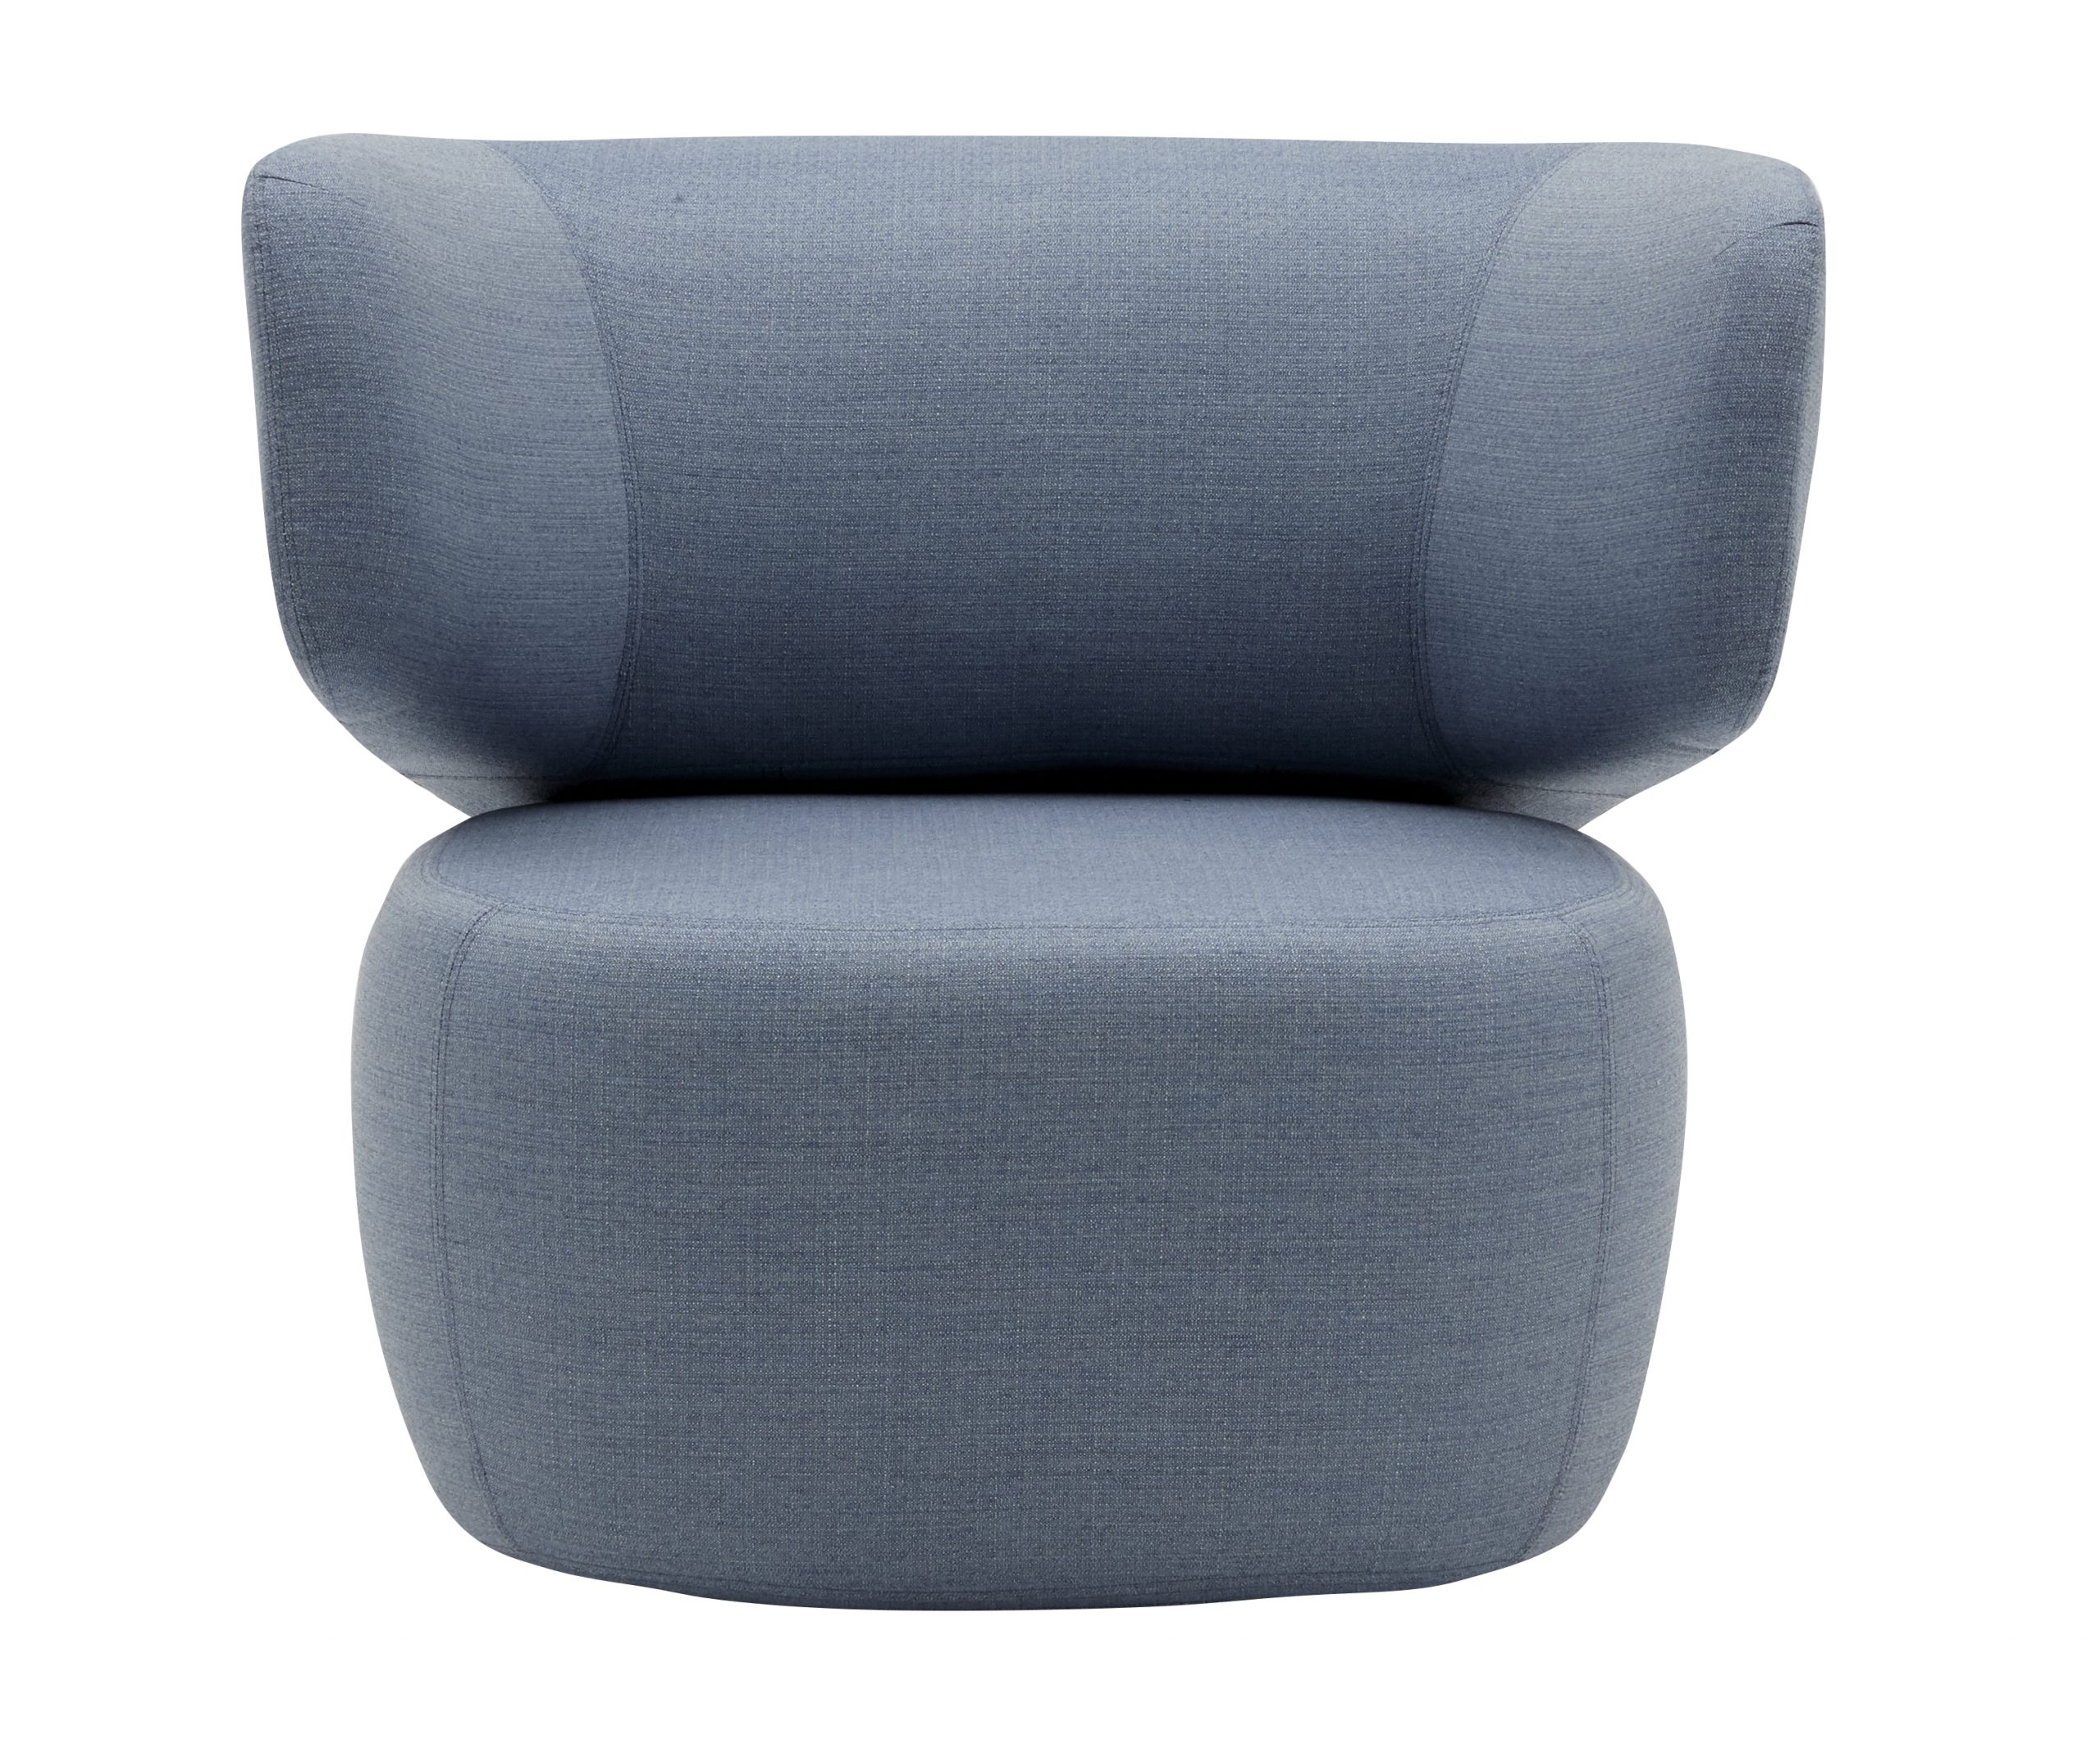 basel-sofa-chair-high-res-07-scaled.jpg